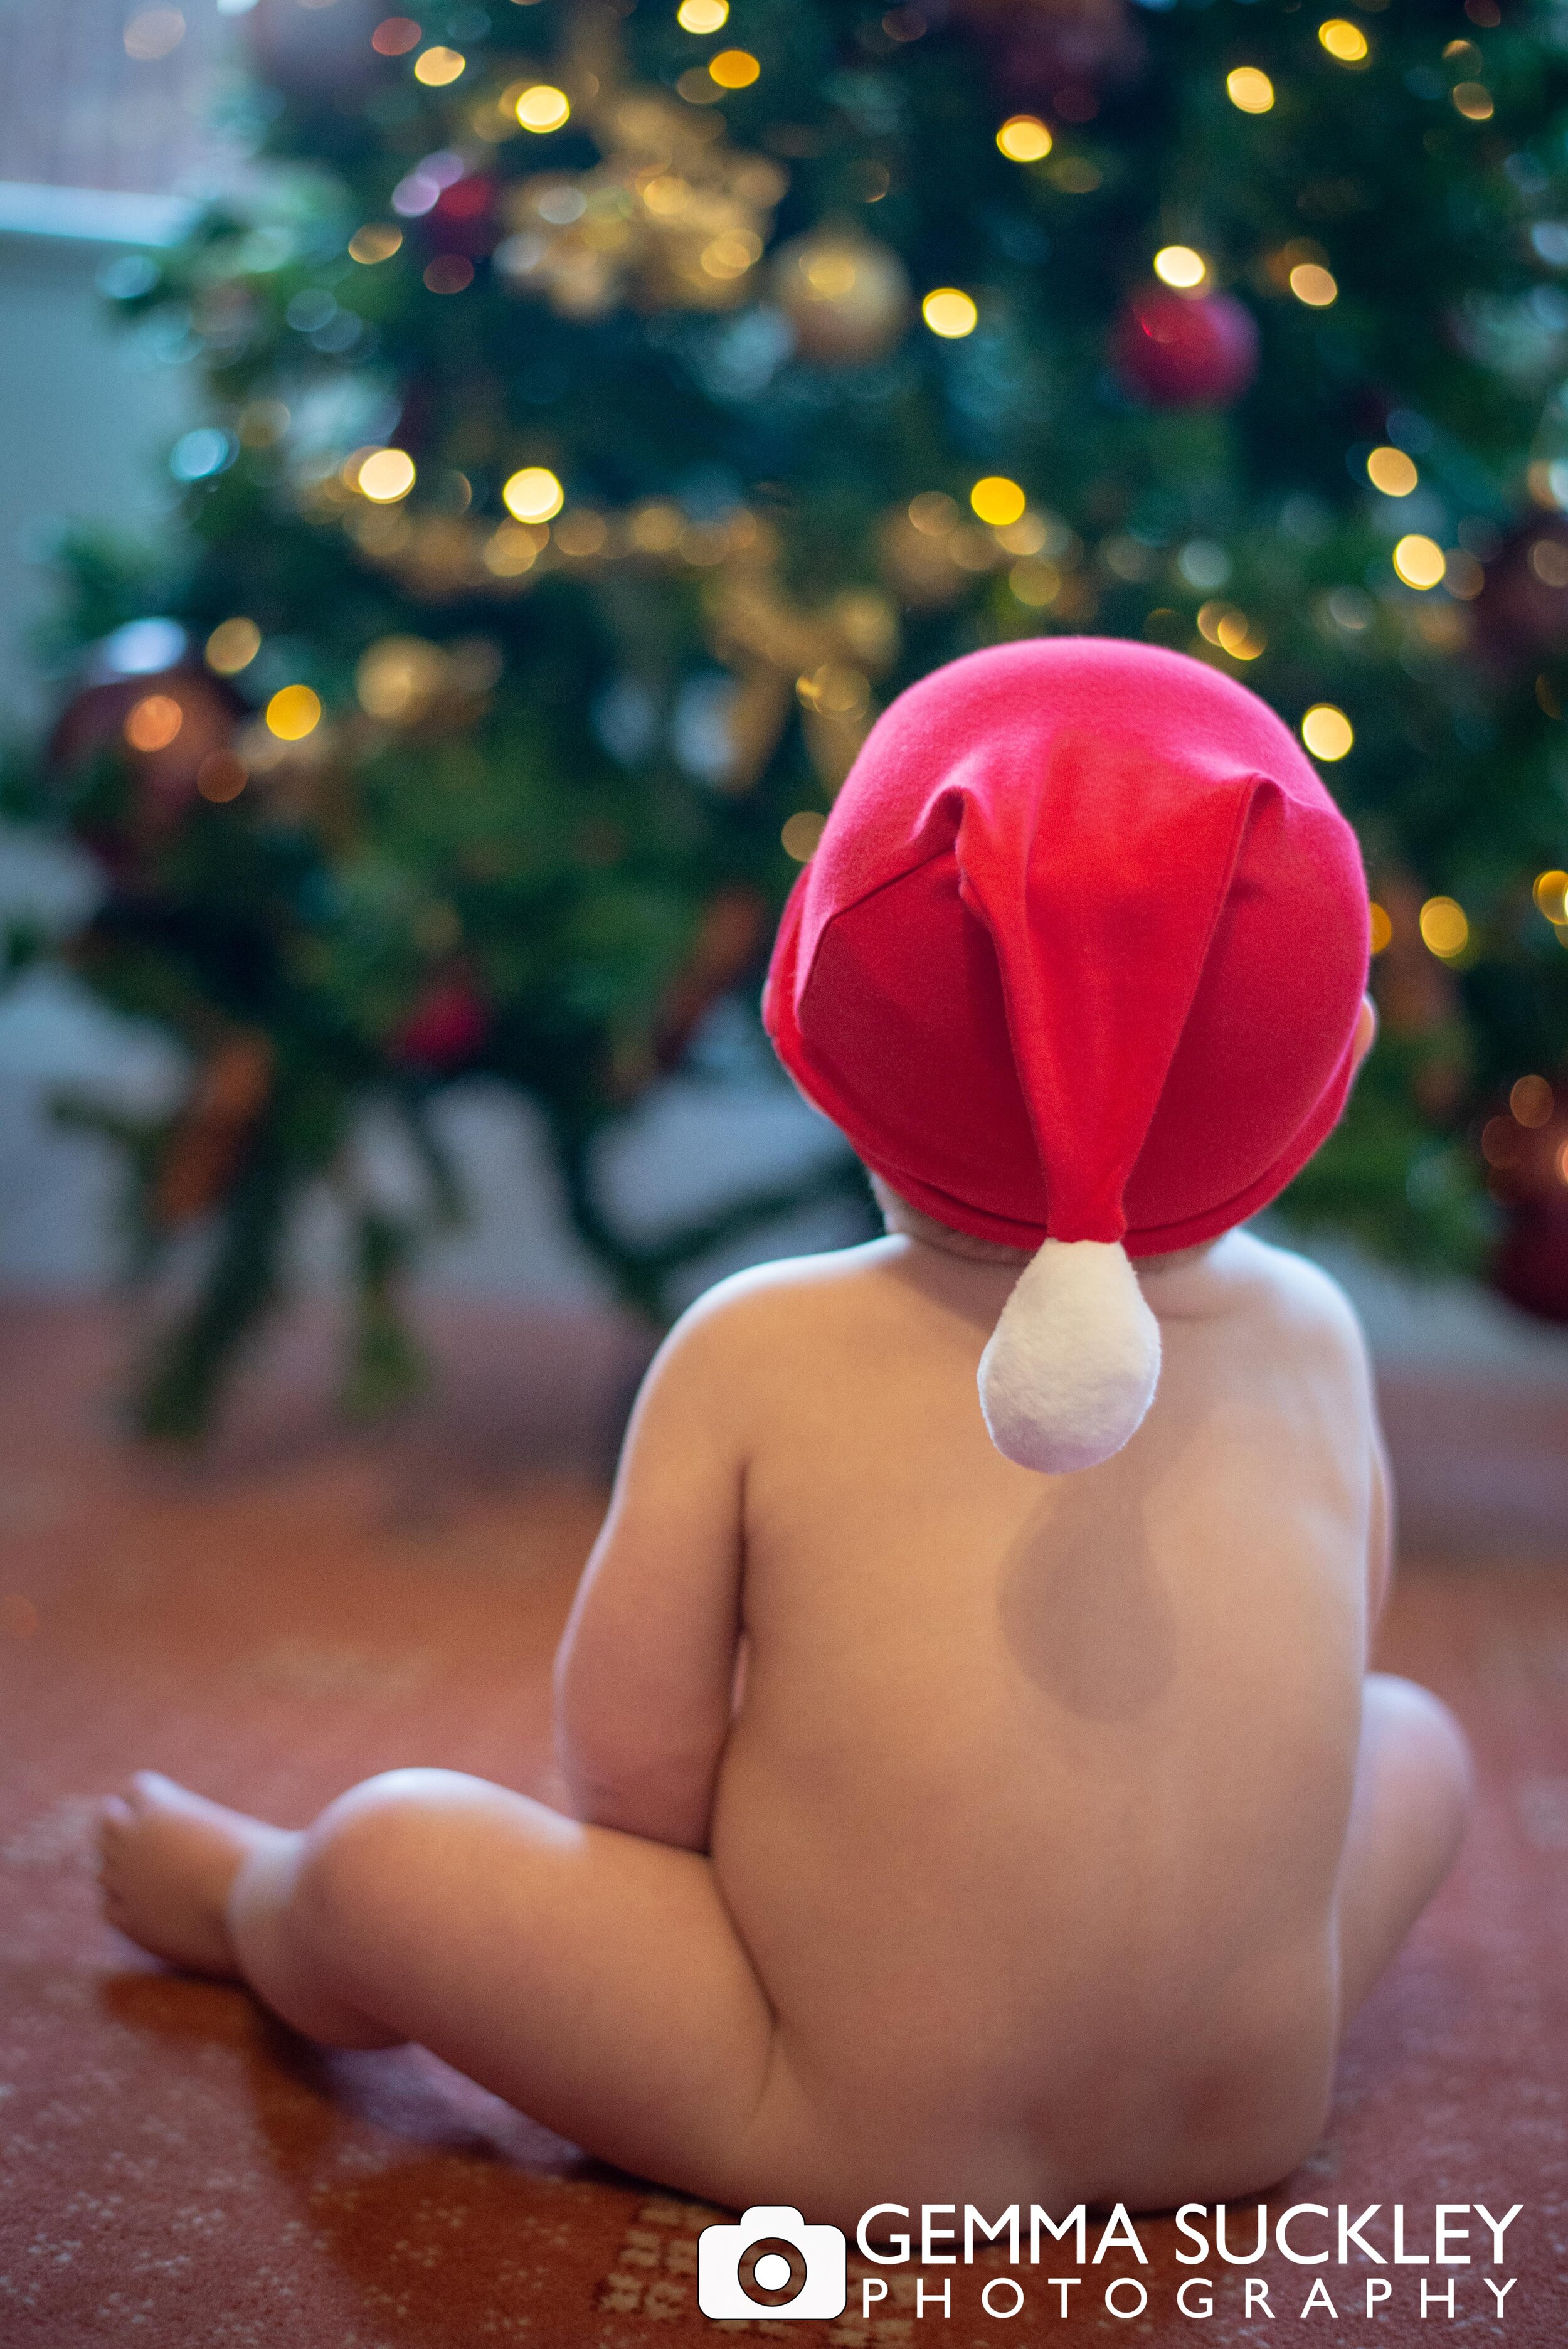 naked baby with santa hat looking at the christmas tree